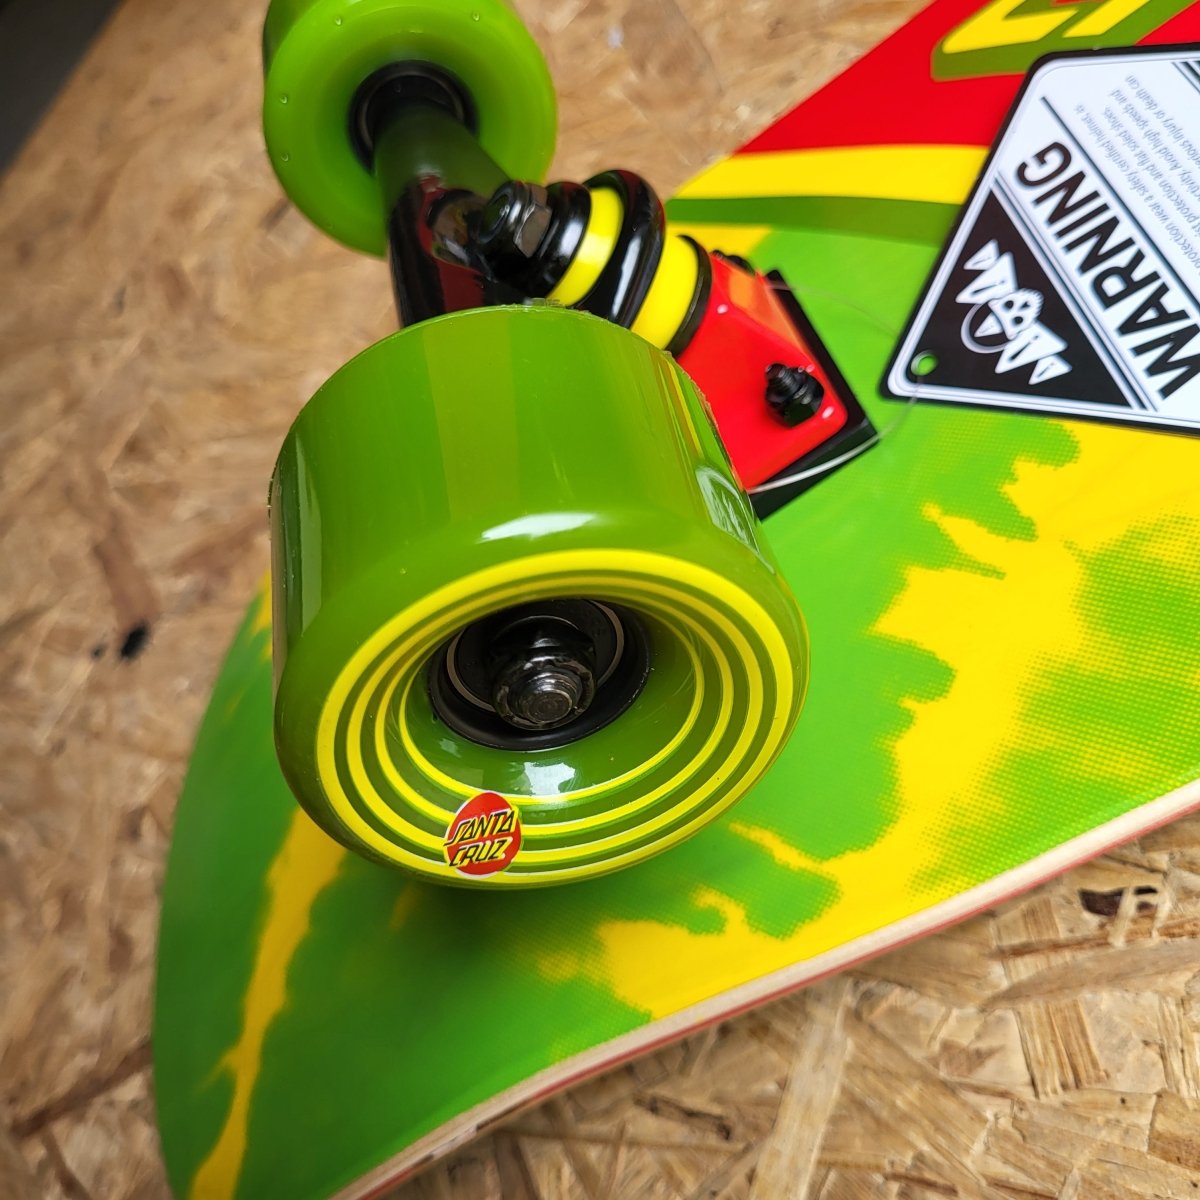 Santa Cruz Rasta Tie Dye Complete Skateboard Cruiser - Skateboards - Rollbrett Mission